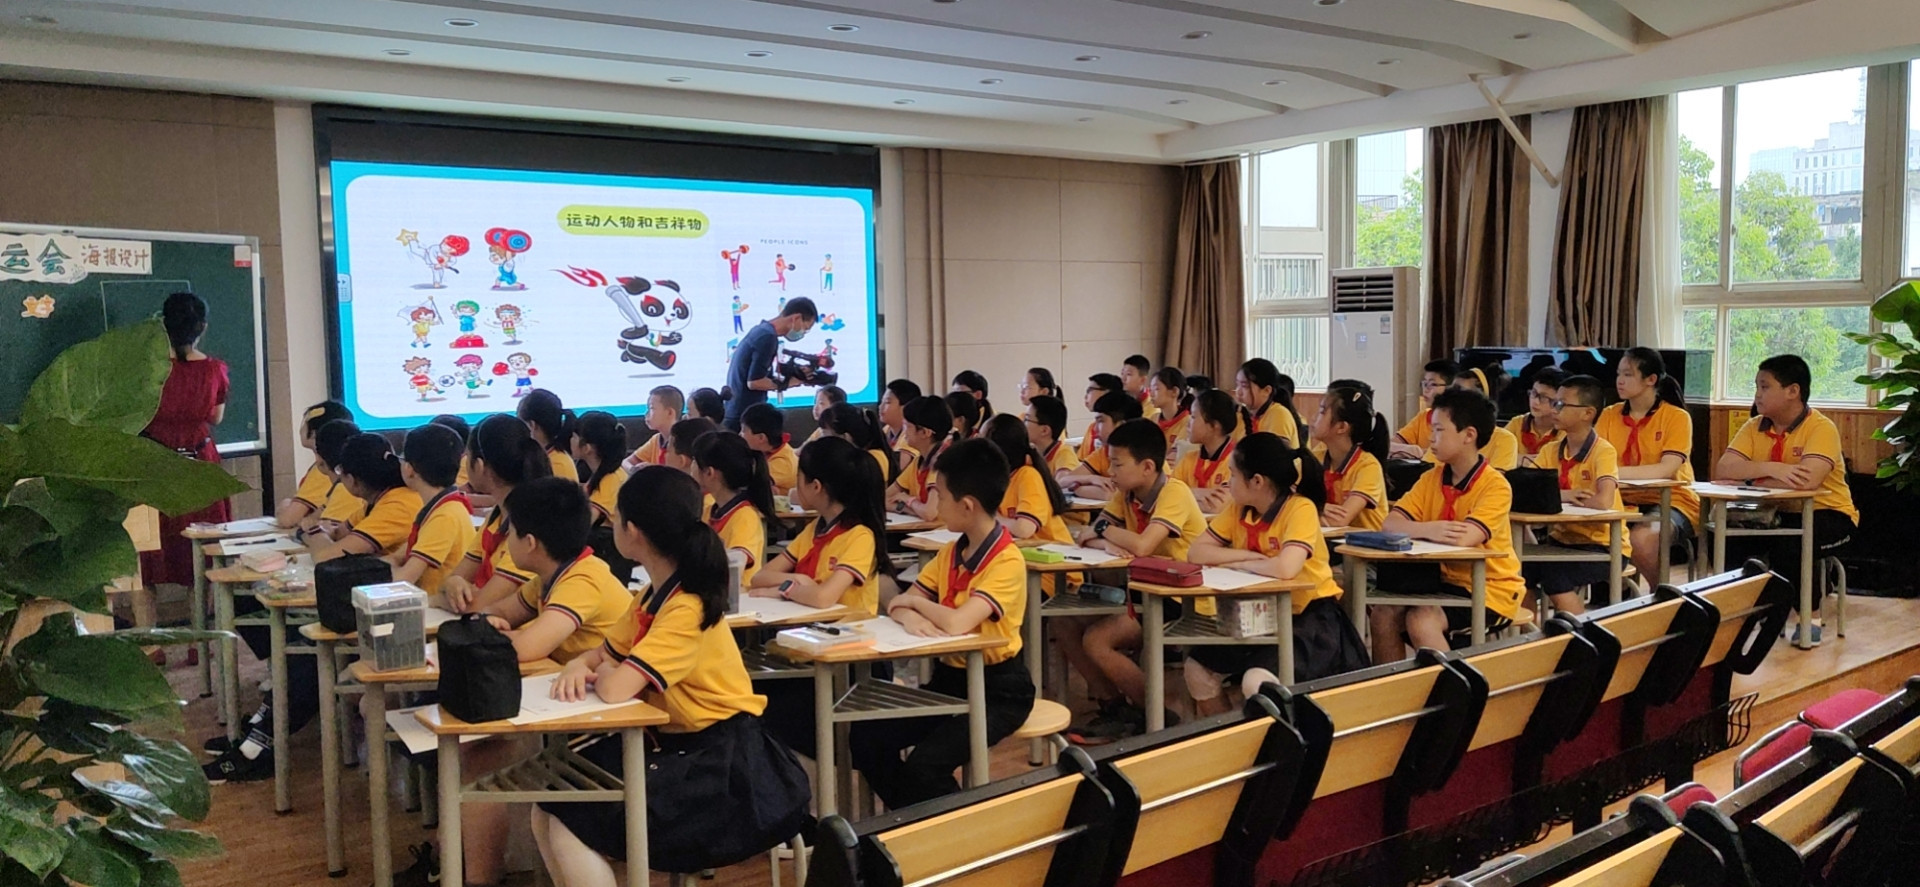 Chengdu 2021 launch painting initiative for children